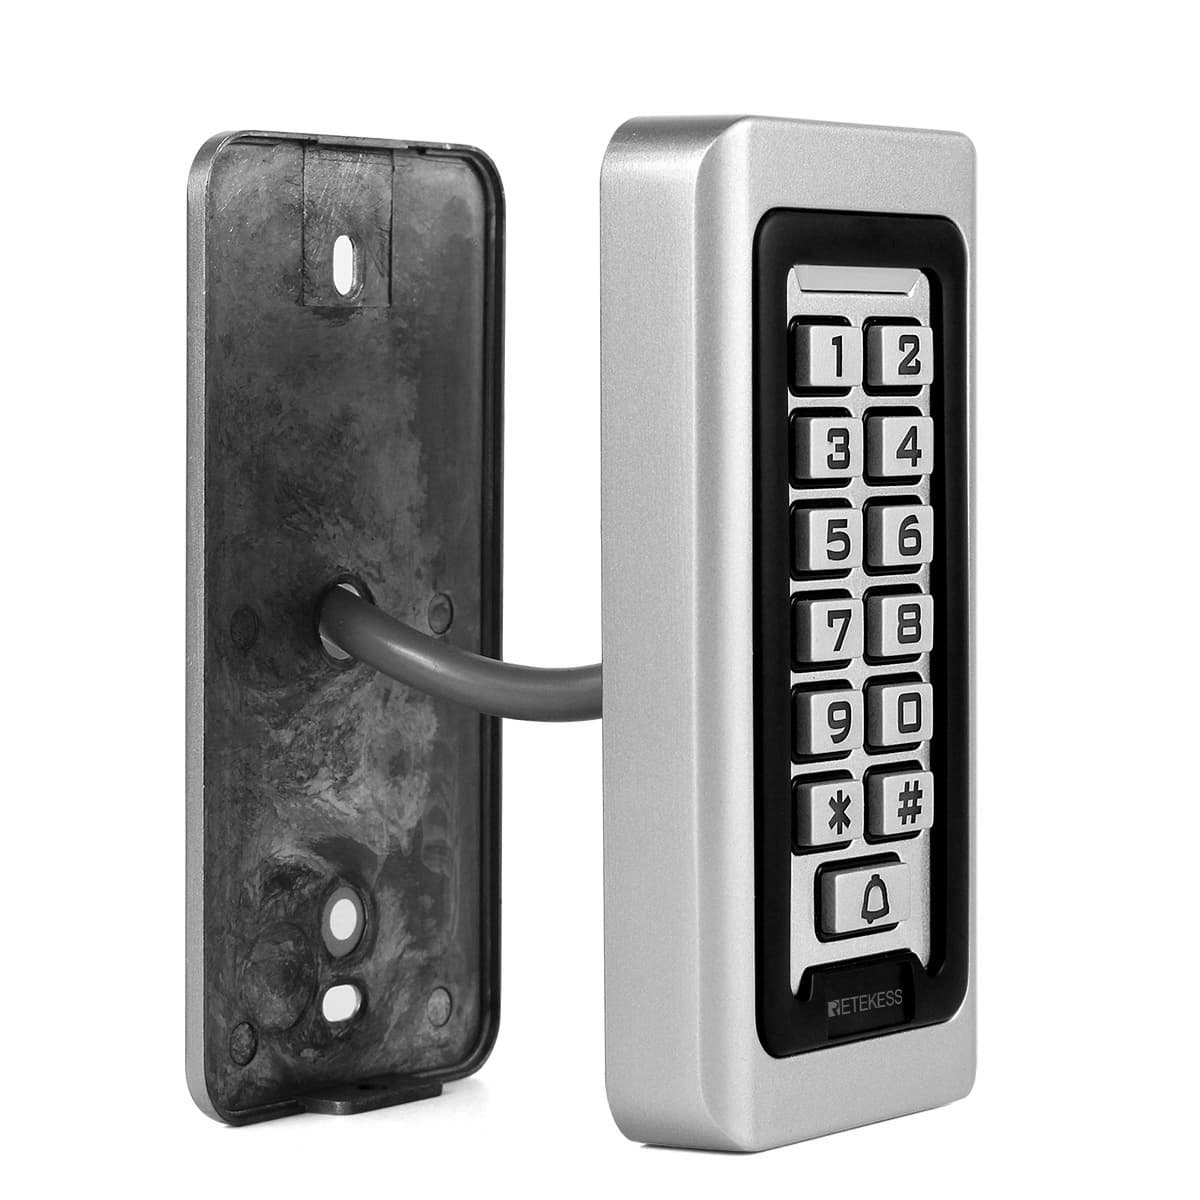 LOCK&KEYS 03 RTP Schloss und Schlüssel, Codelock Keys, Standalone, Systems, Access Control